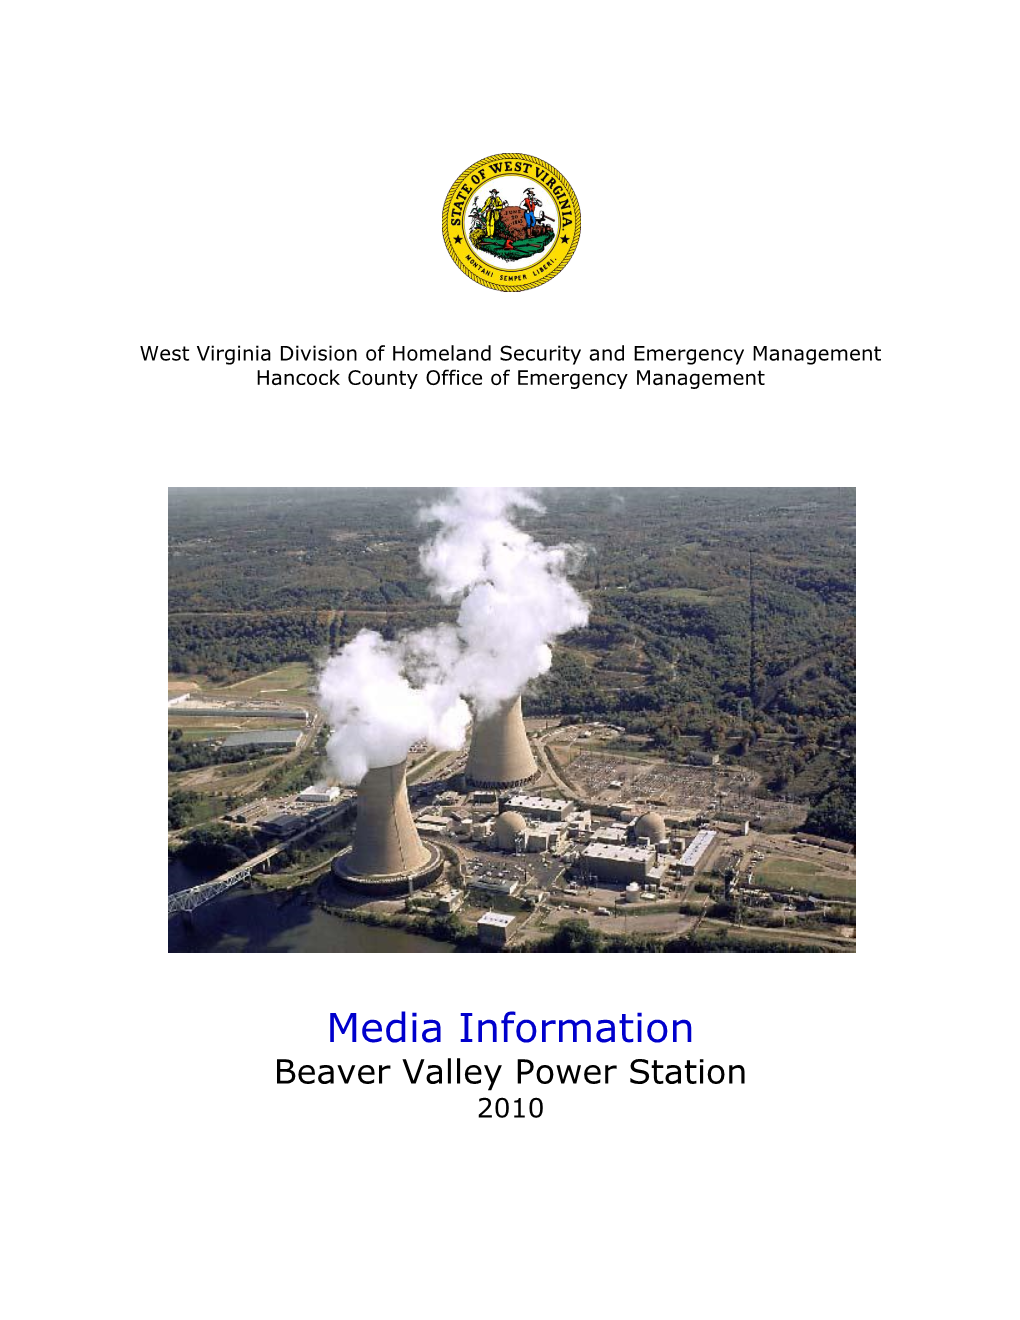 Media Information Beaver Valley Power Station 2010